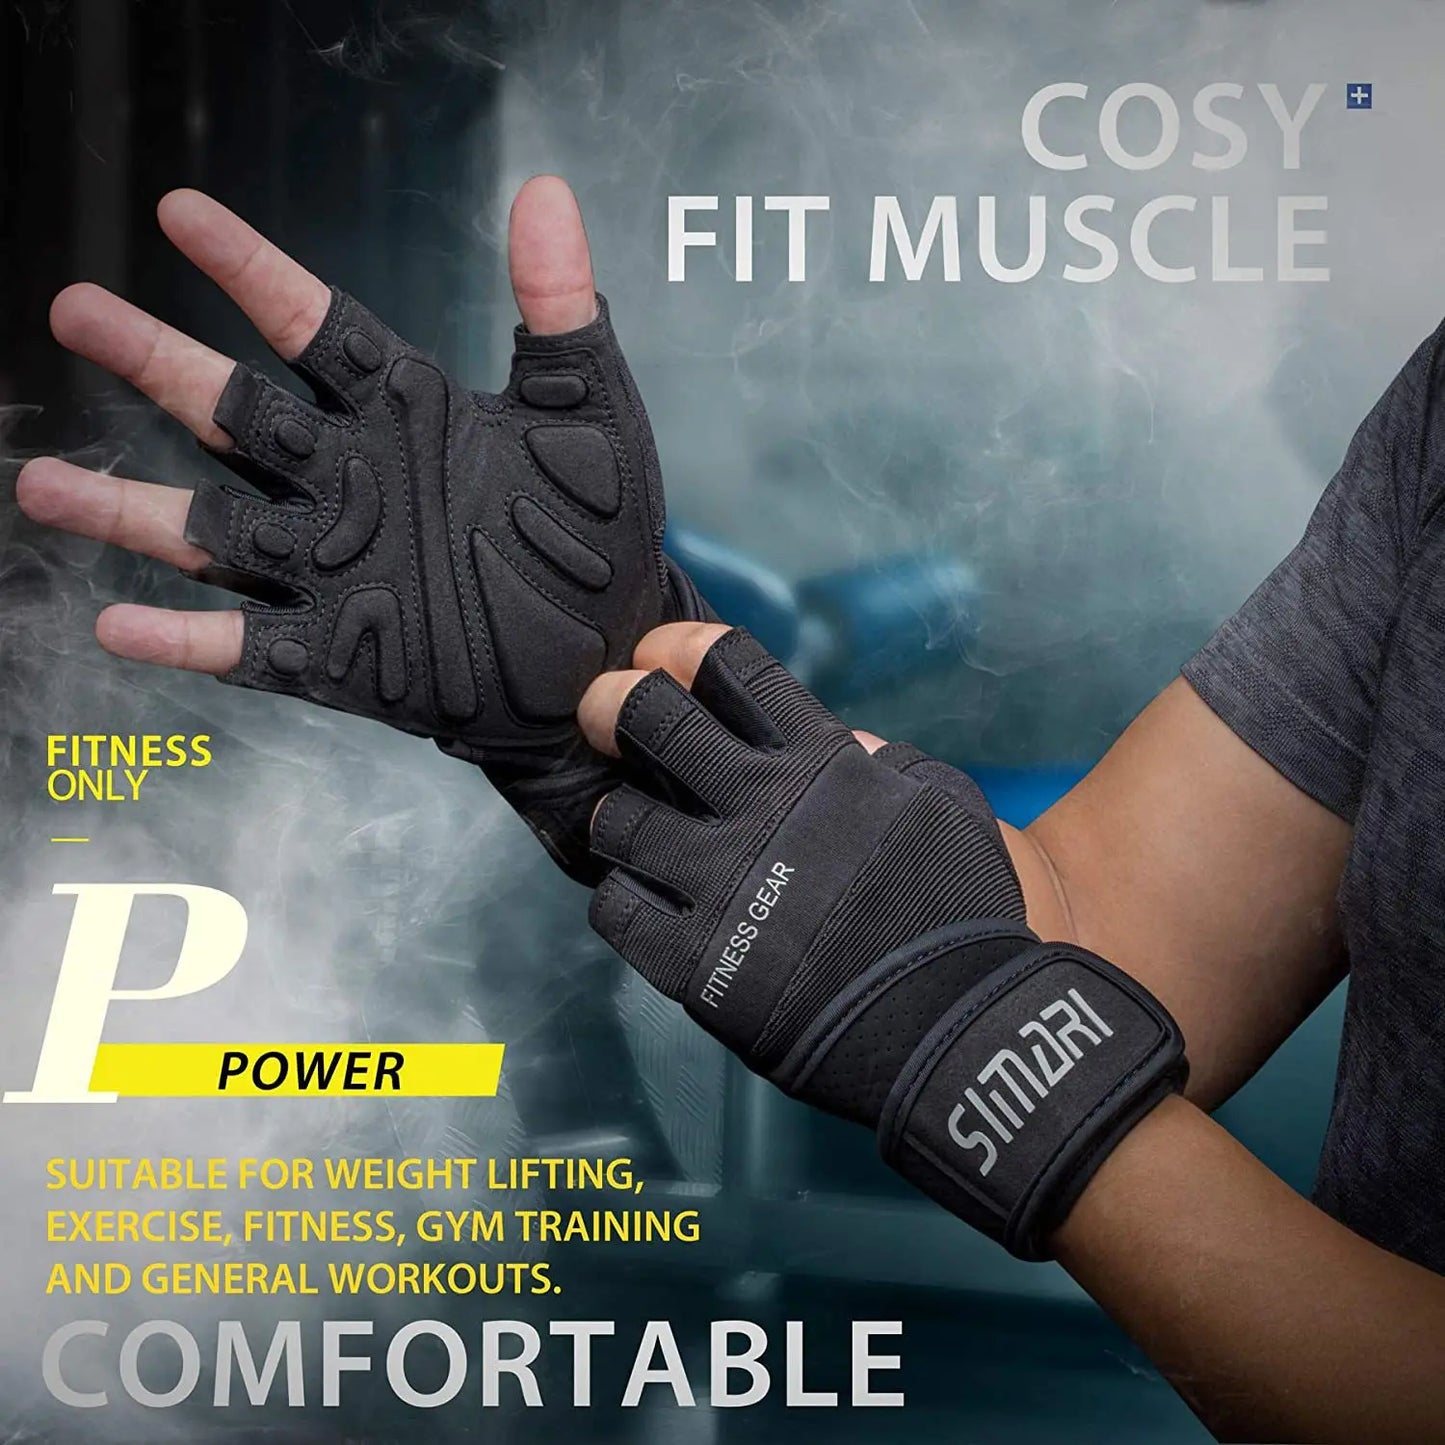 Wristband  fitness gloves